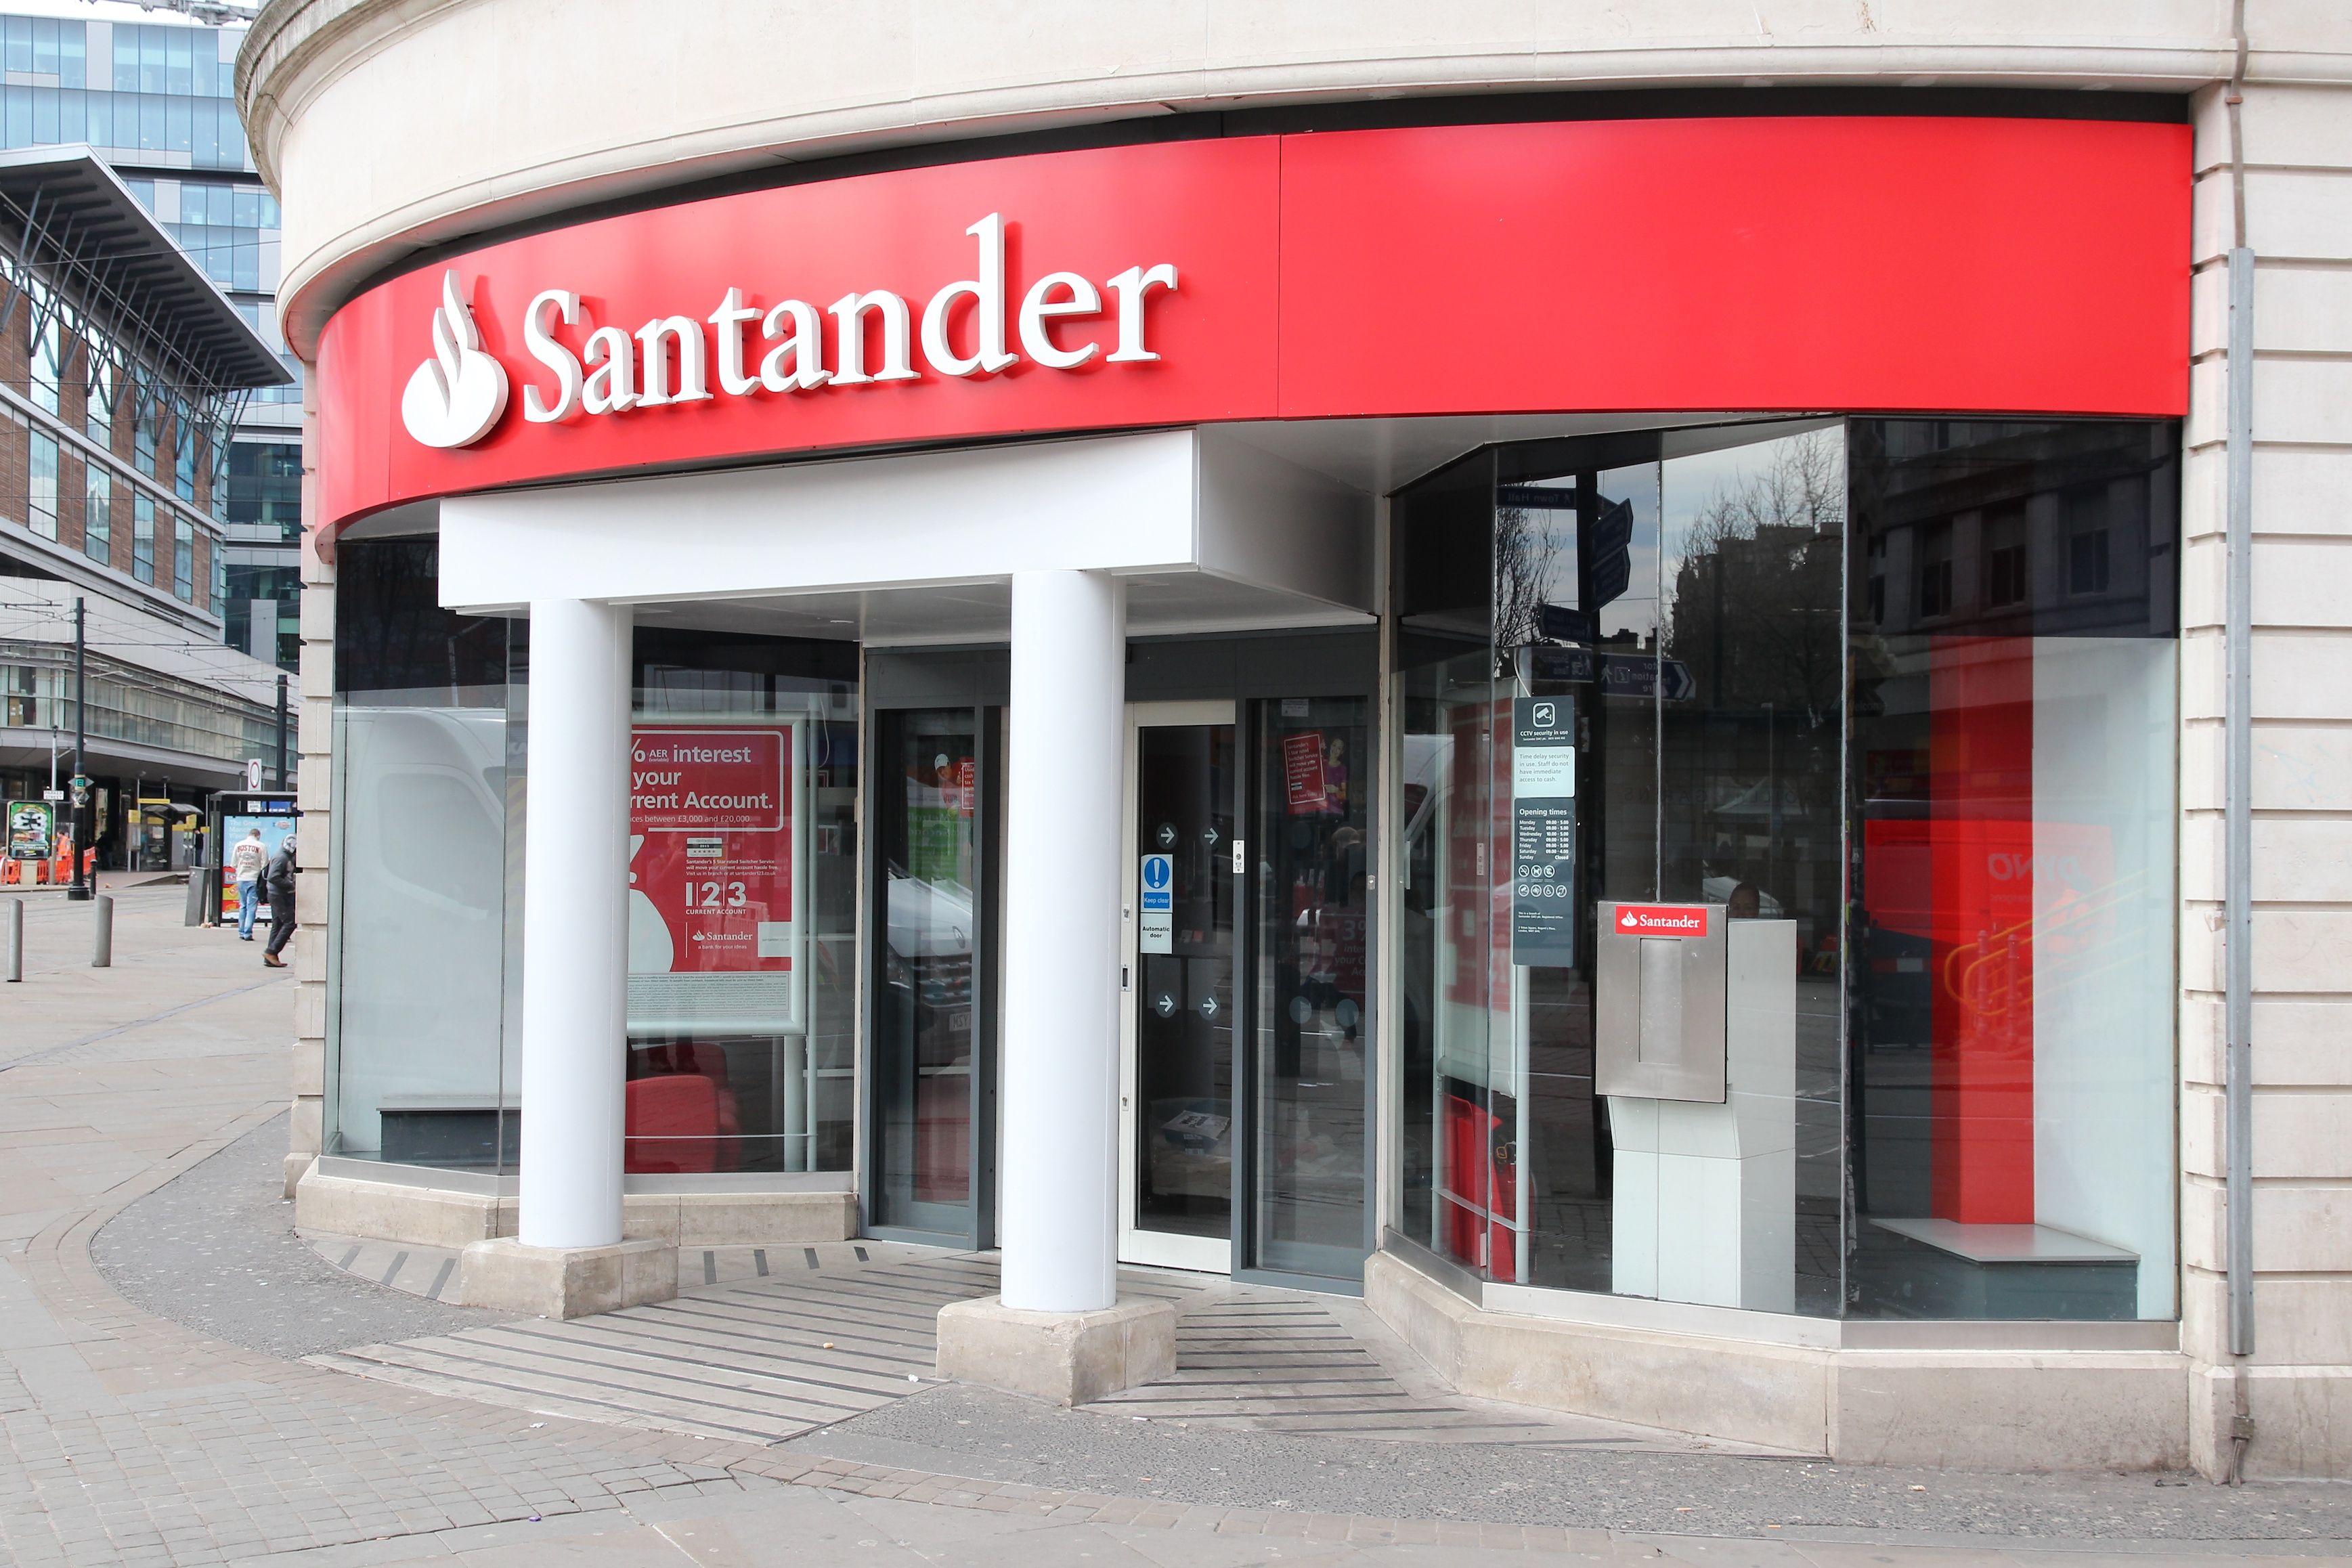 Santander Uk To Close 140 Branches Including 14 In London Santander London